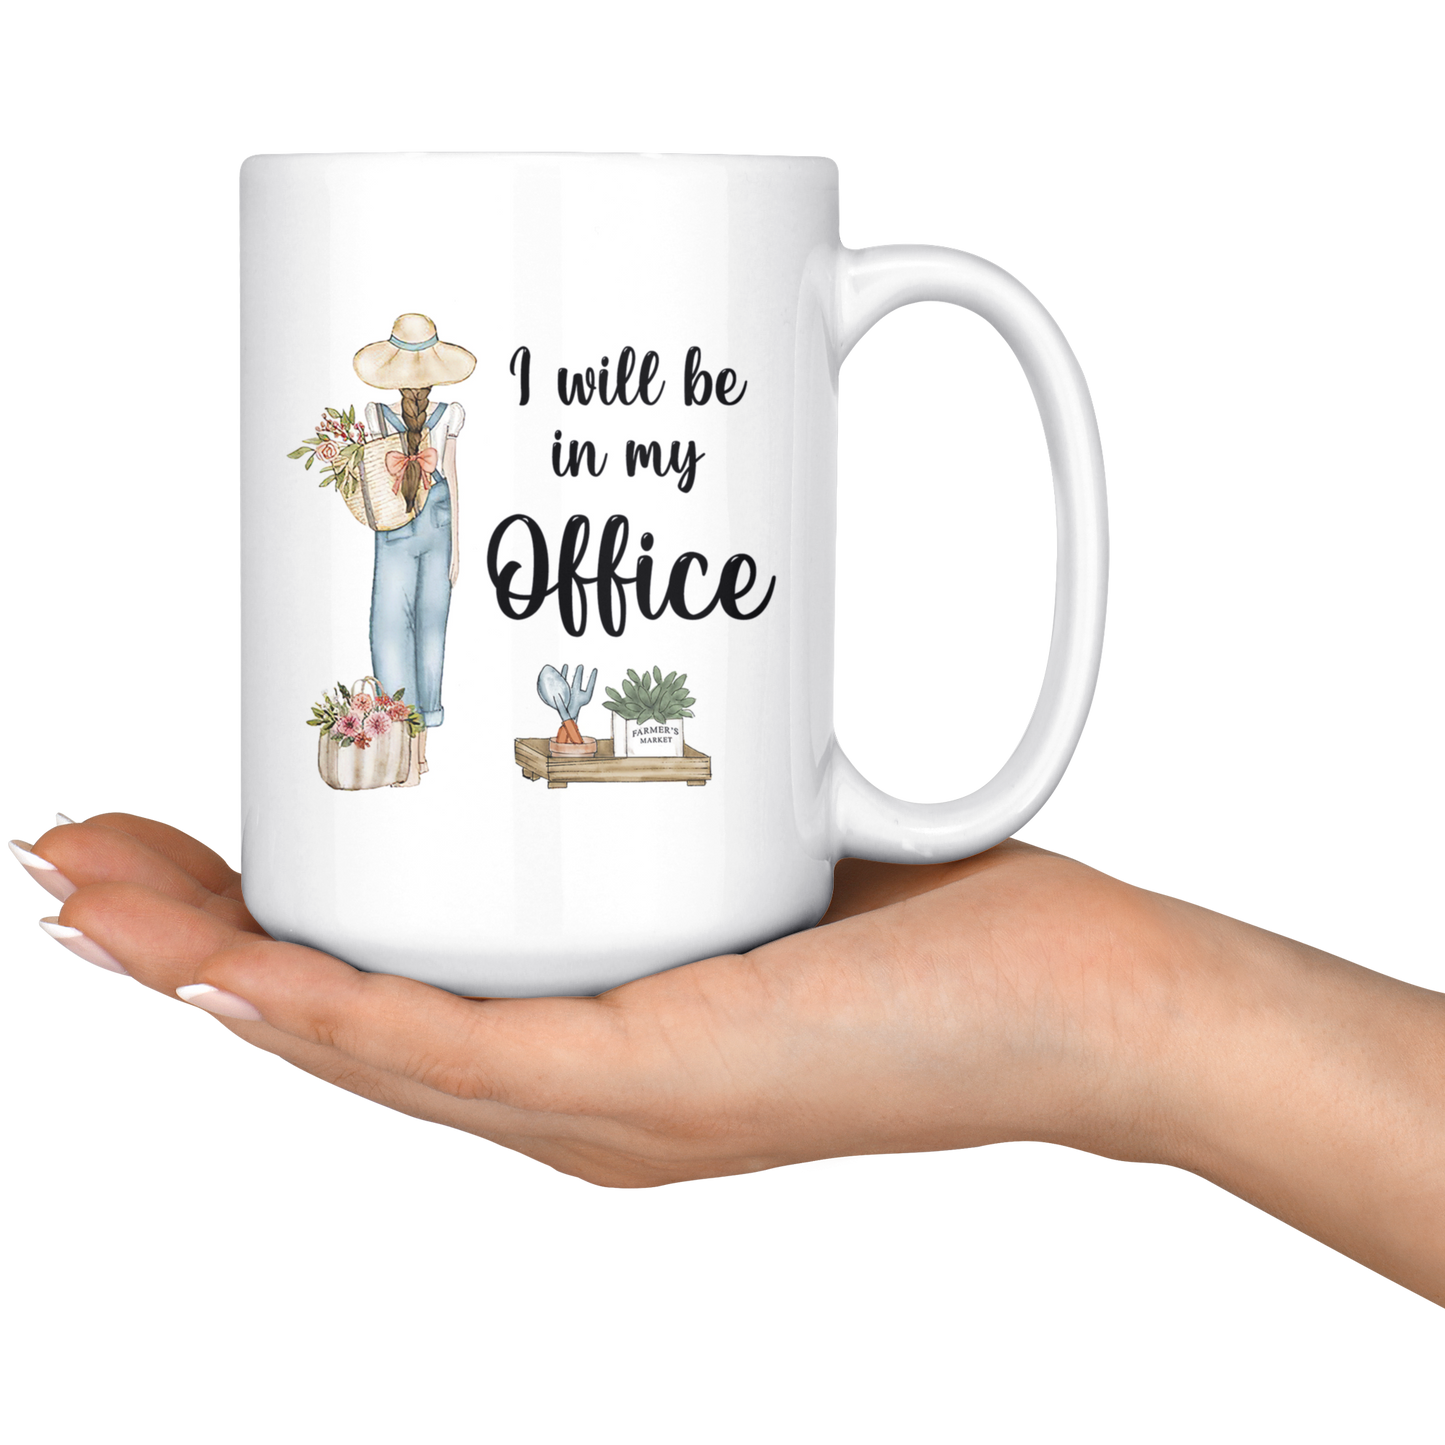 I will be in my office mug